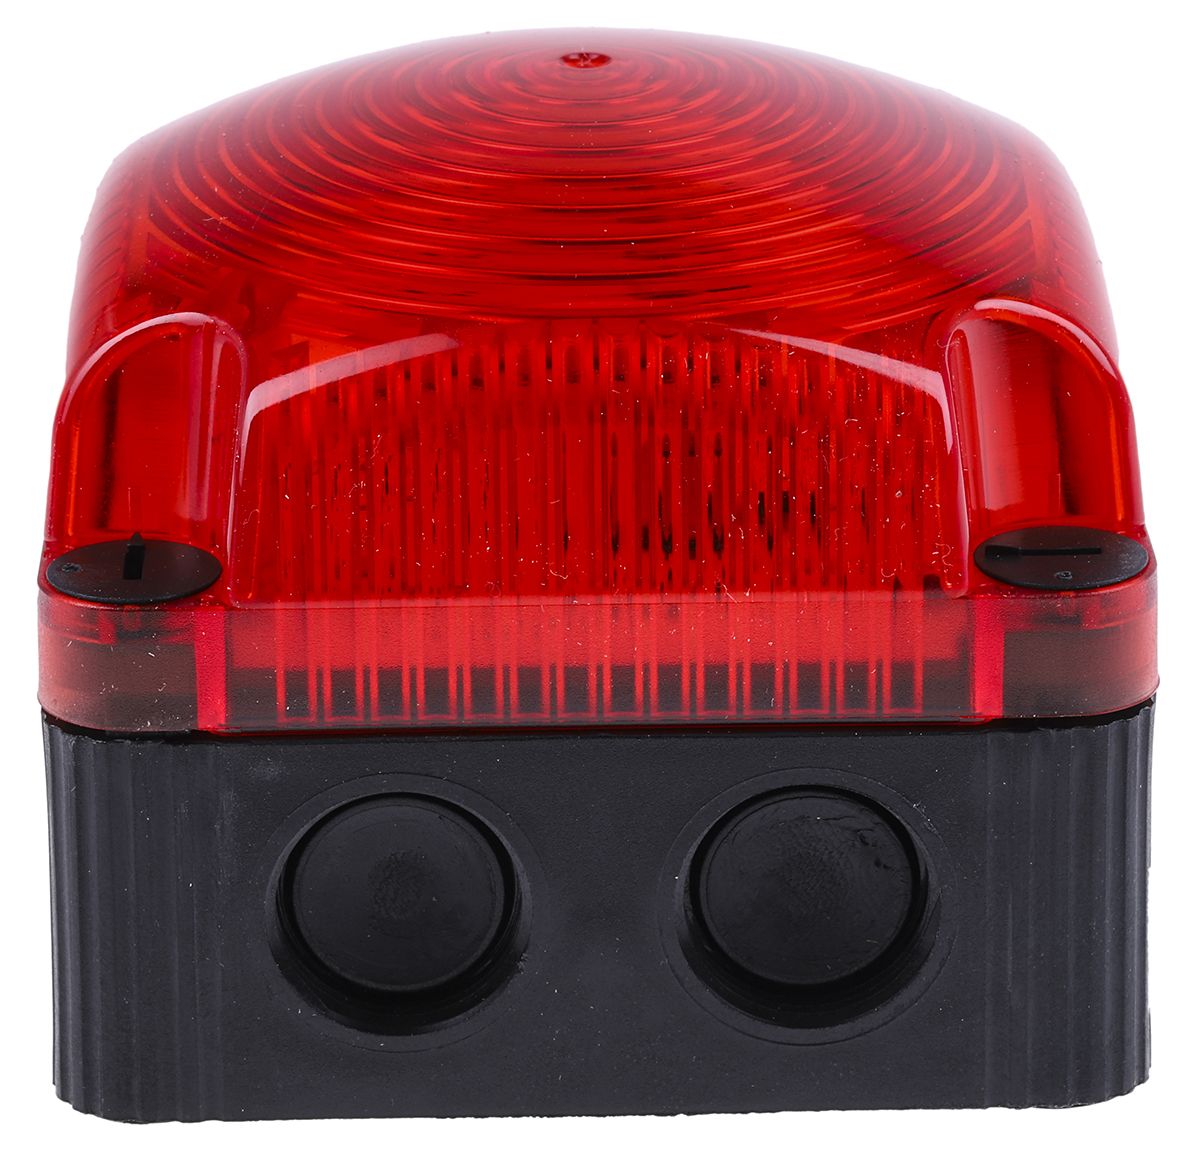 Werma BMW 853 Series Red Flashing Beacon, 115 → 230 V ac, Surface Mount, Wall Mount, LED Bulb